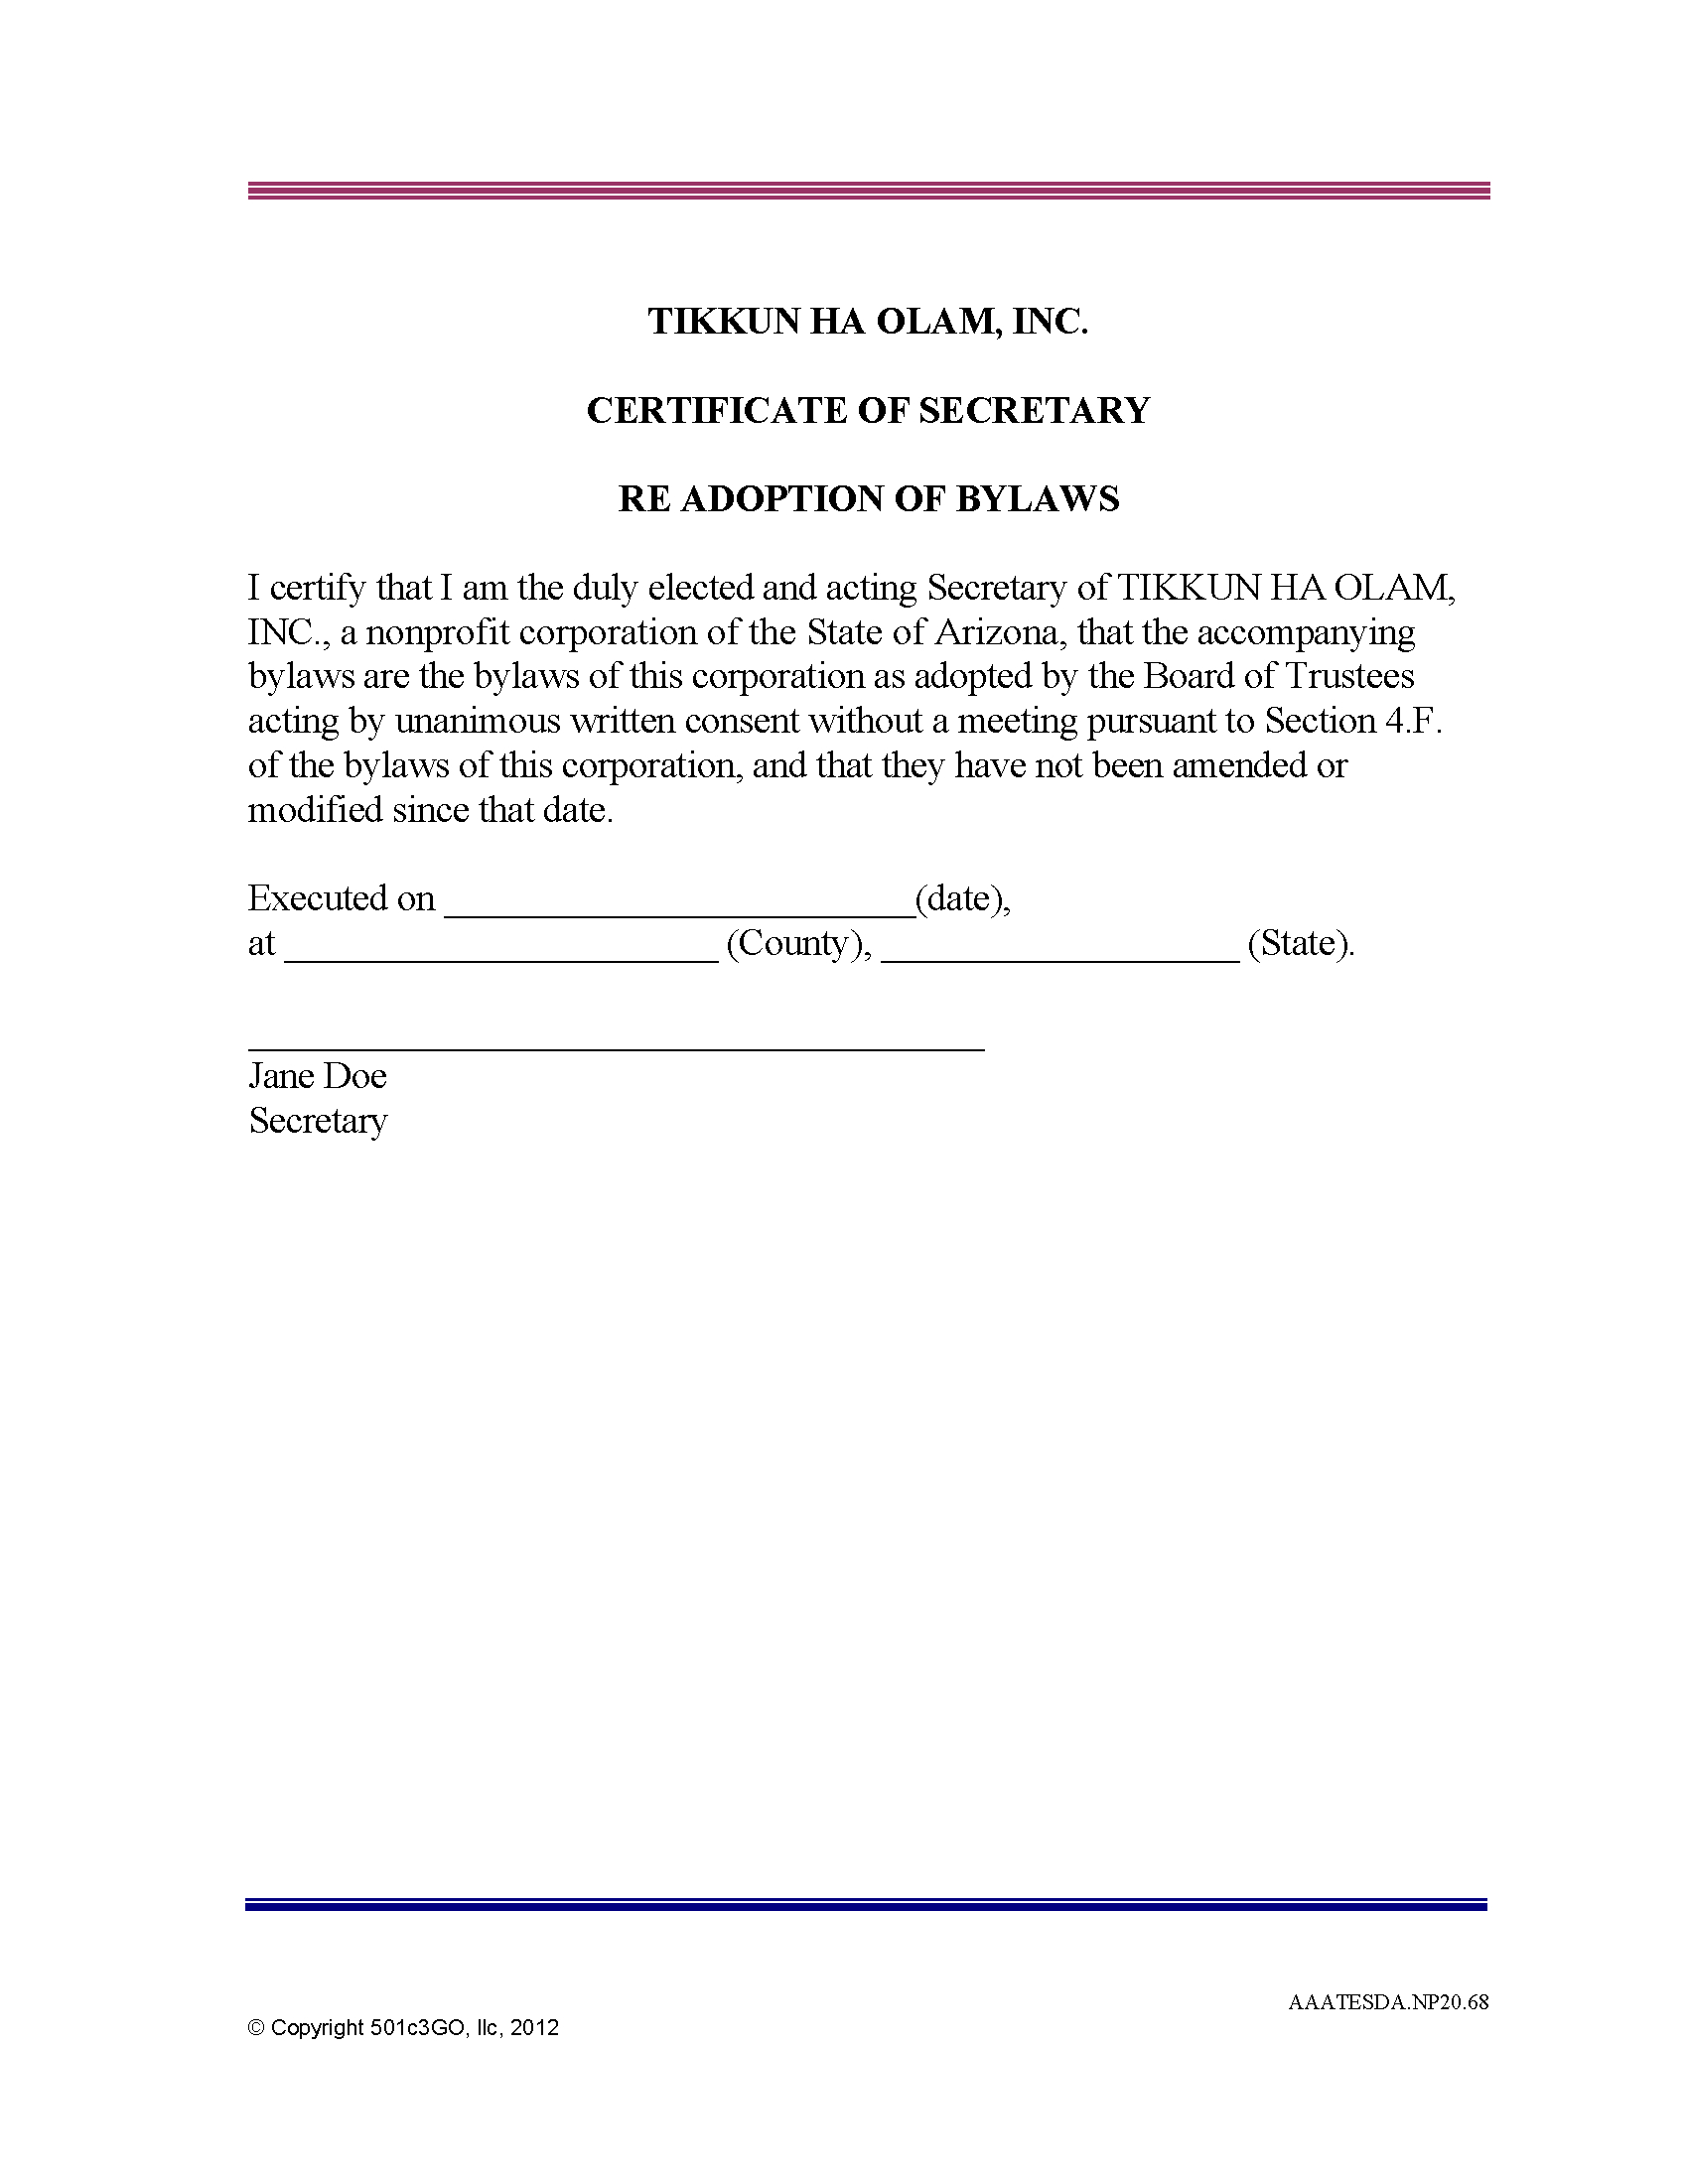 Certificate Of Secretary Re Adoption Of Bylaws | 501C3Go Inside Corporate Secretary Certificate Template